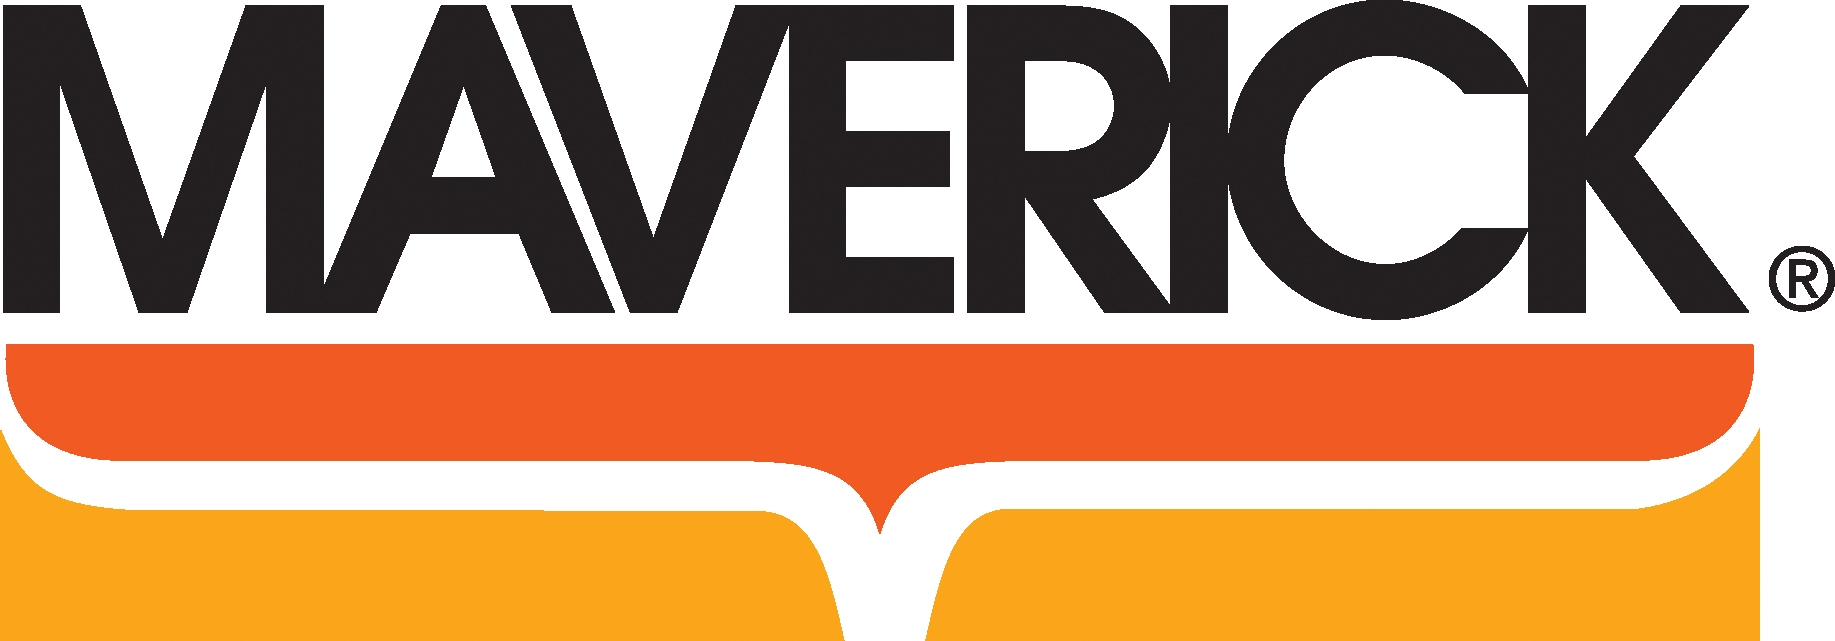 https://www.grills.hamburg/wp-content/uploads/2015/05/Maverick-Logo.jpg